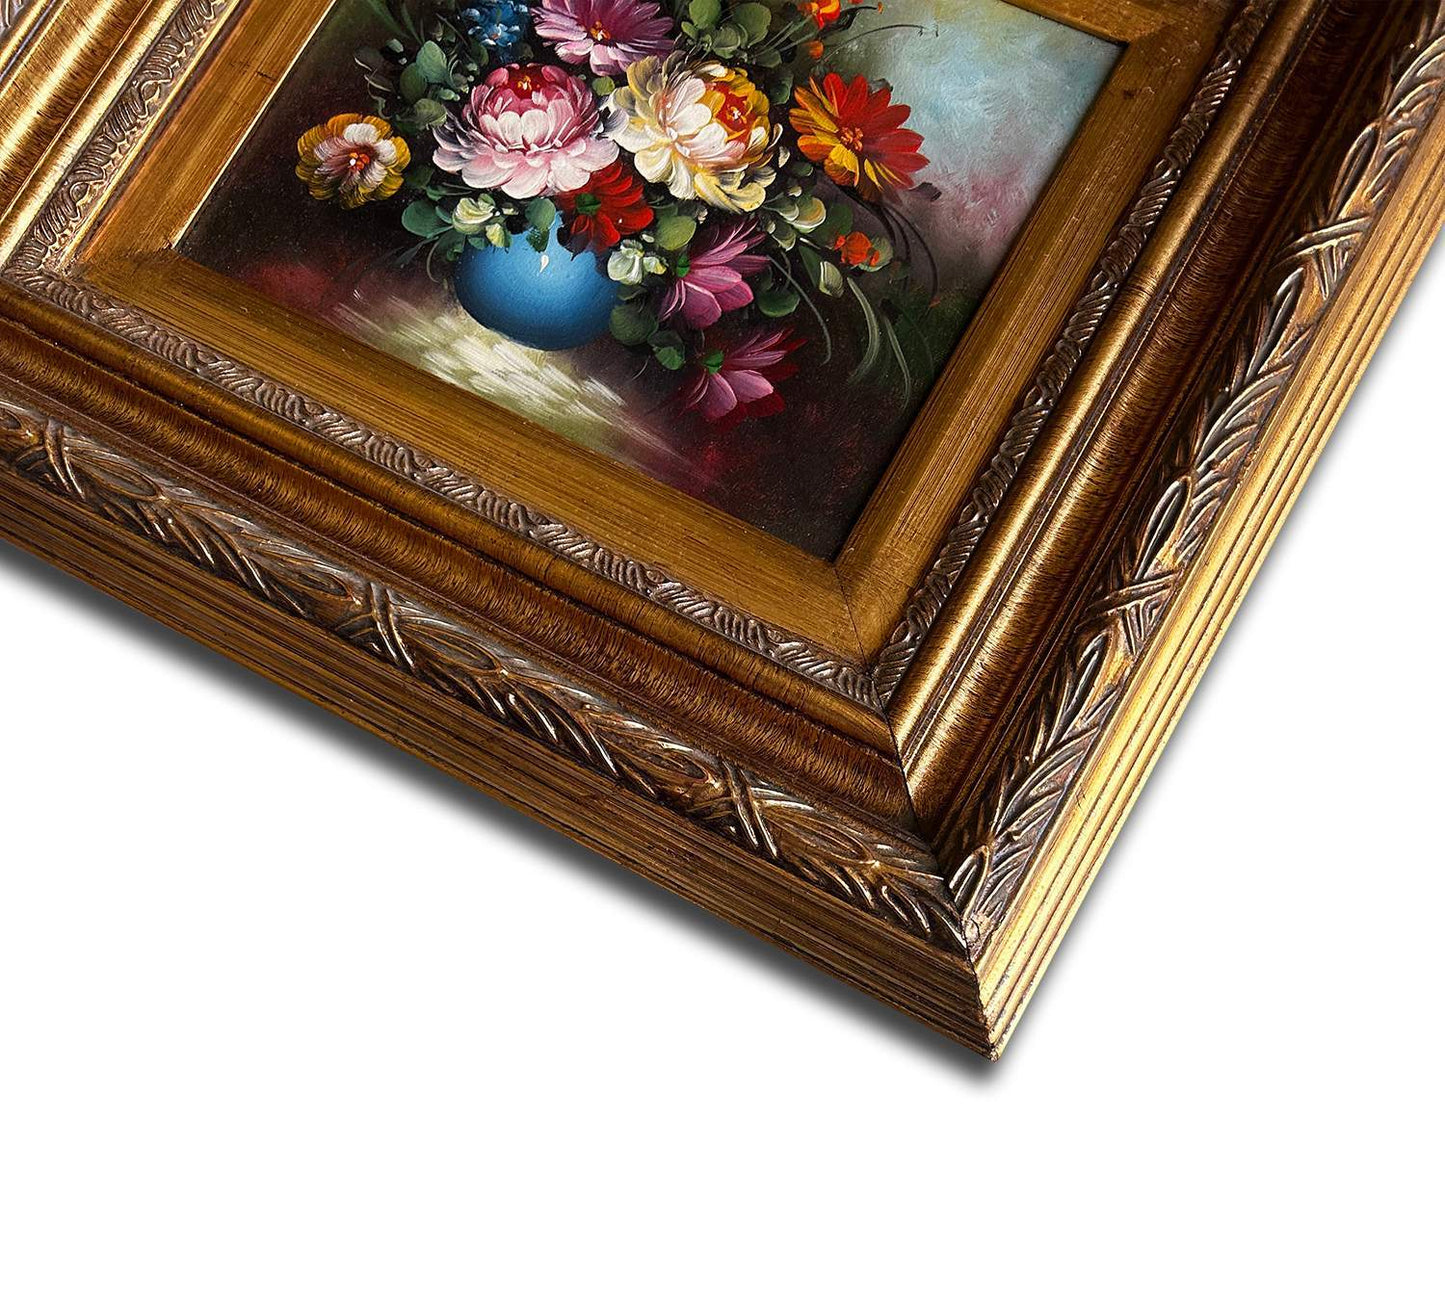 Floral flowers, hand-painted oil painting 41x46 cm eller 16x18 ins